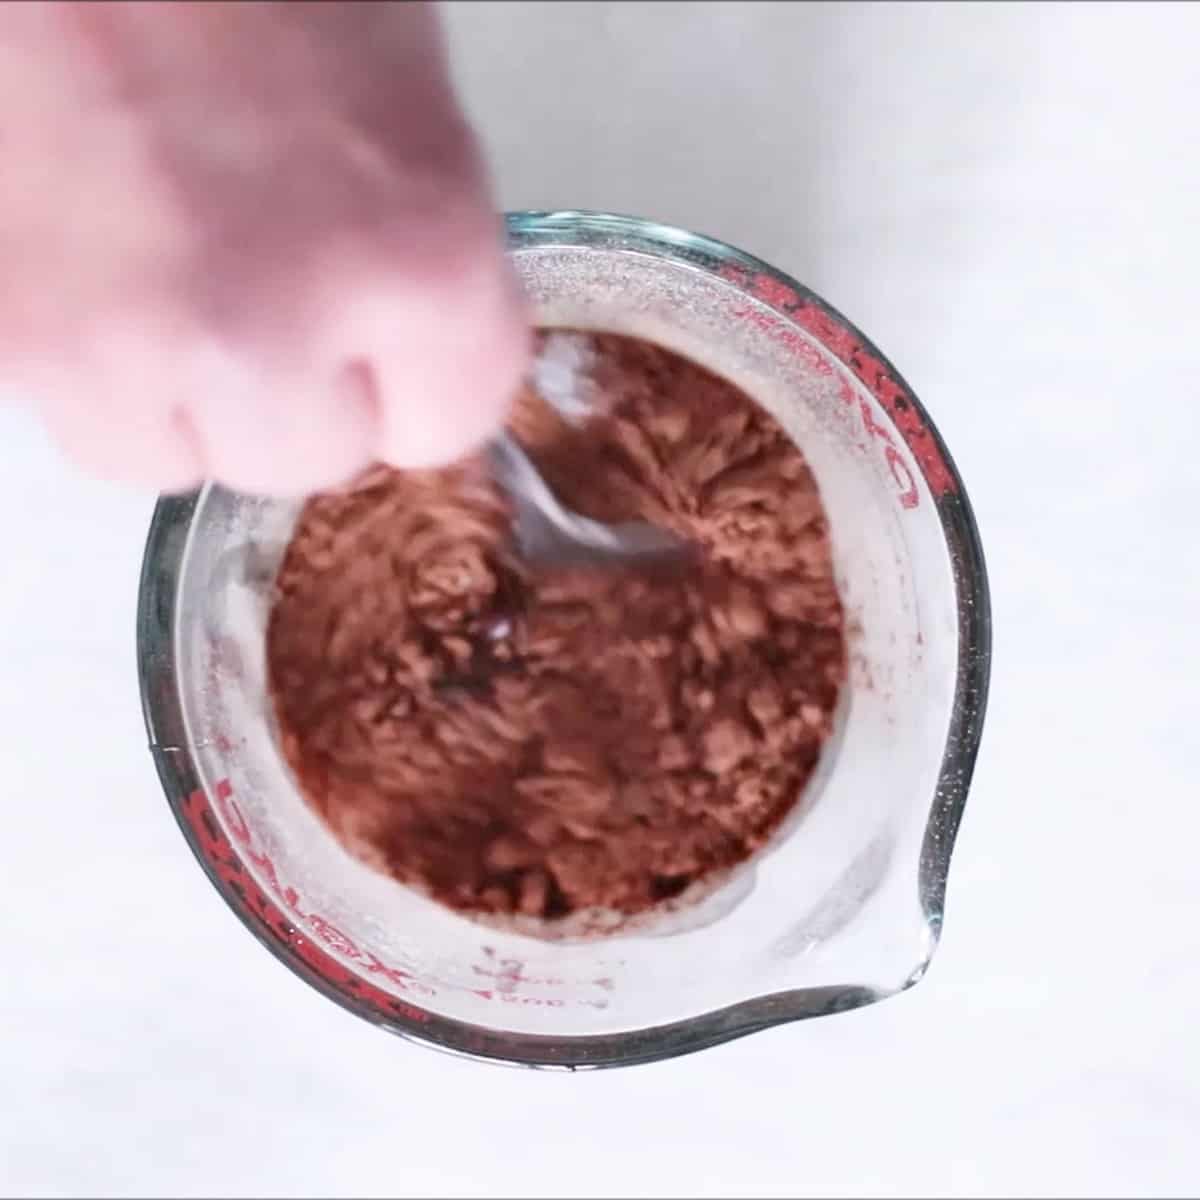 How to Make Chocolate